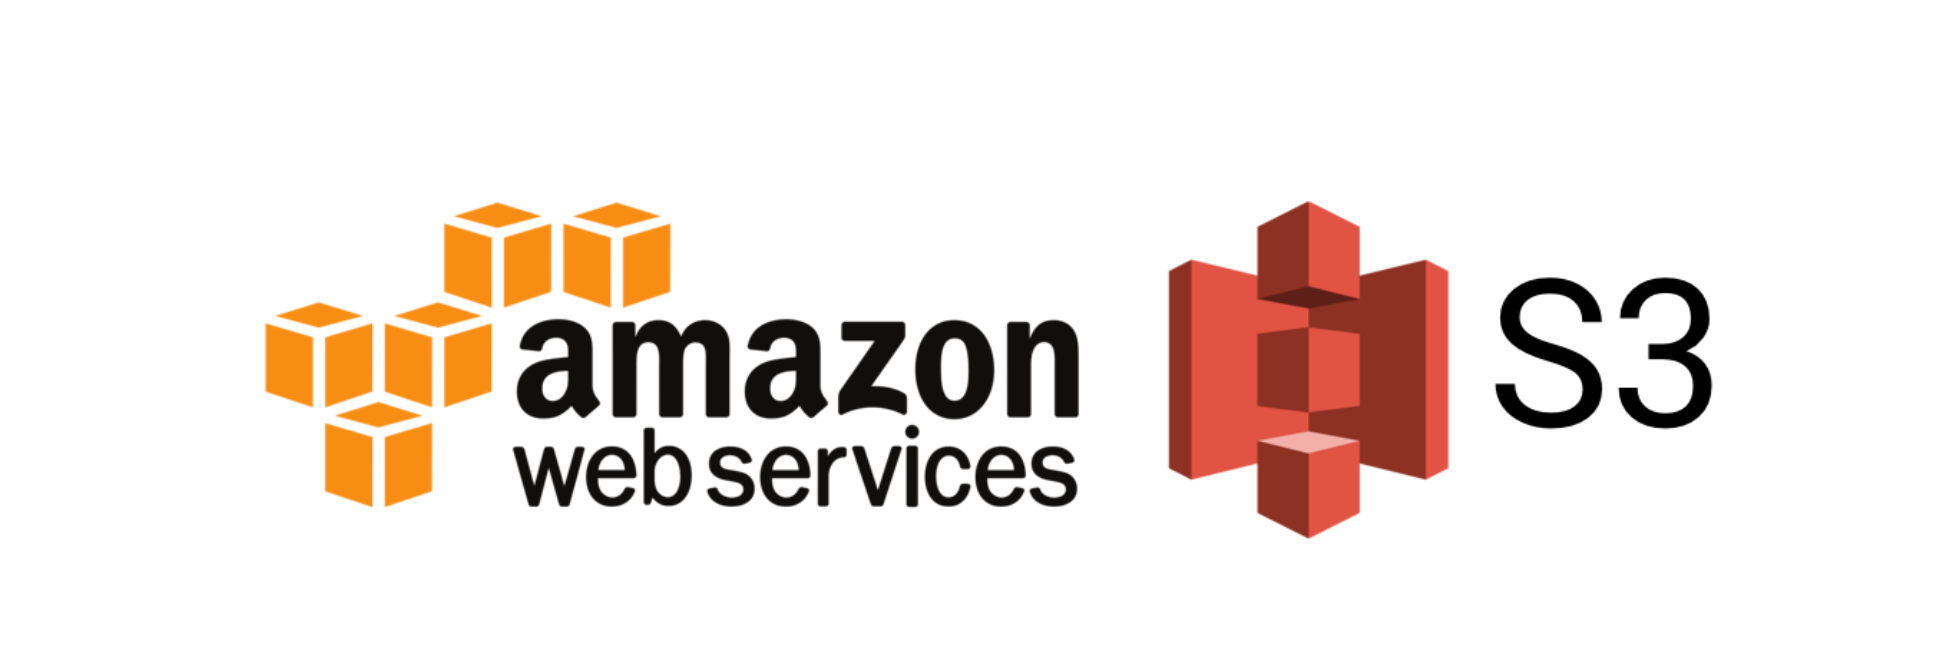 Amazon S3 logo: Kinesis S3